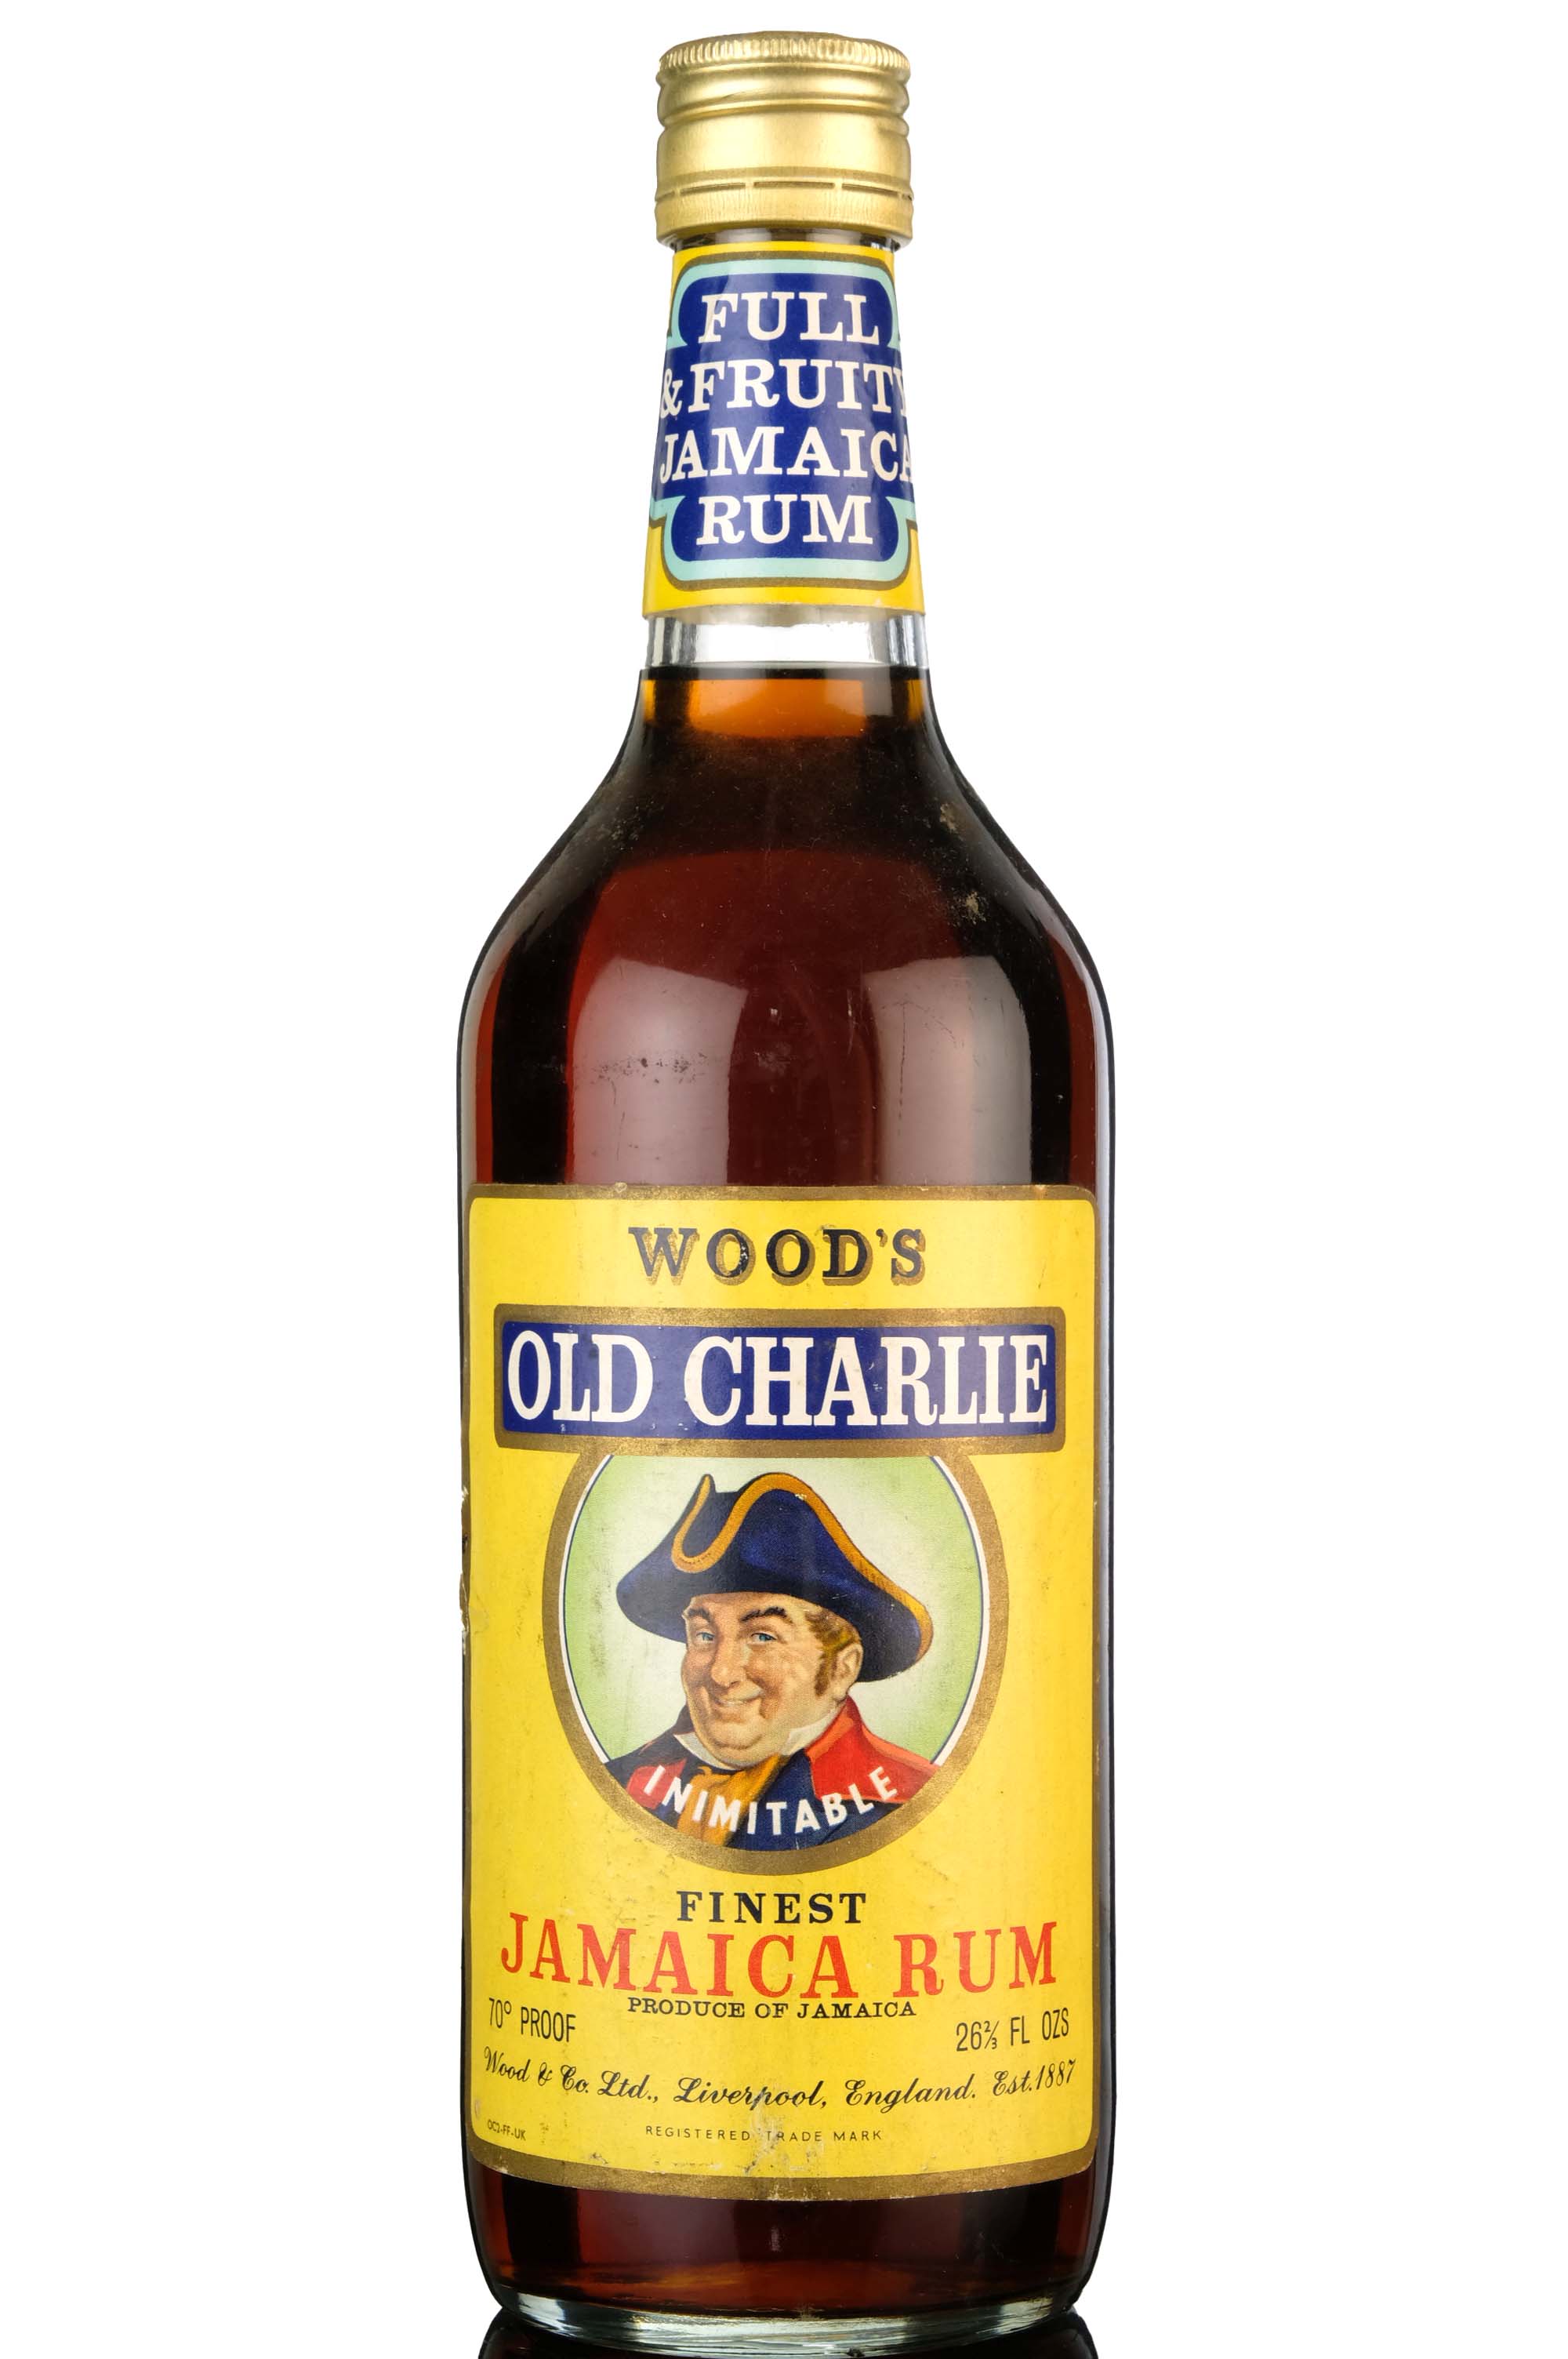 Woods Old Charlie Finest Jamaica Rum - 1970s